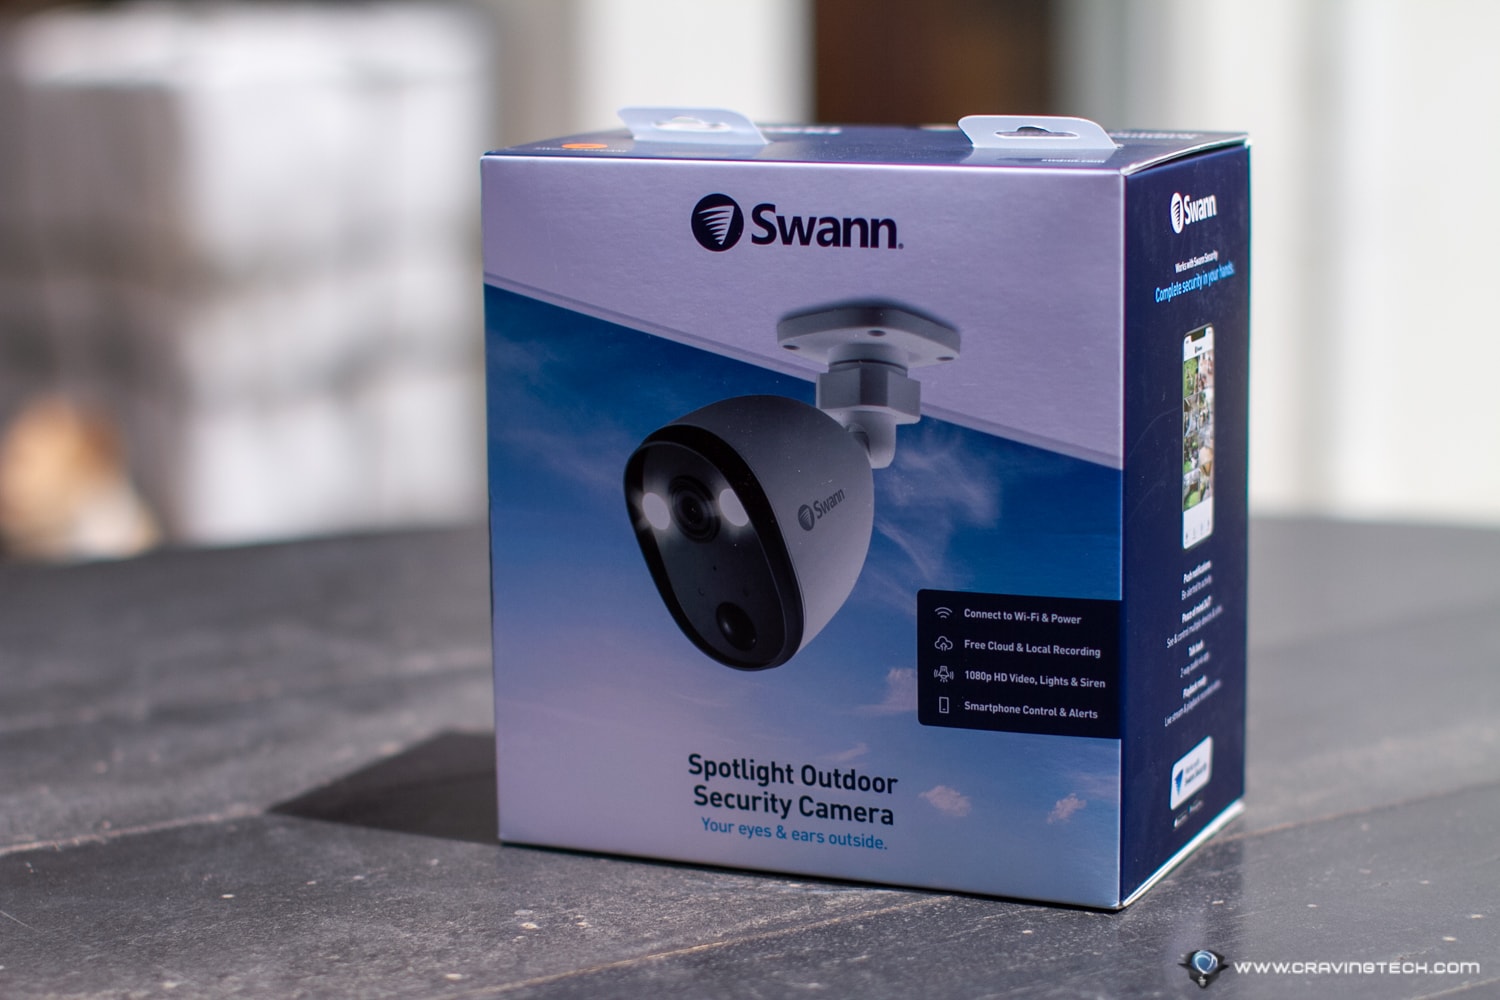 Swann Spotlight Outdoor Security Camera Packaging